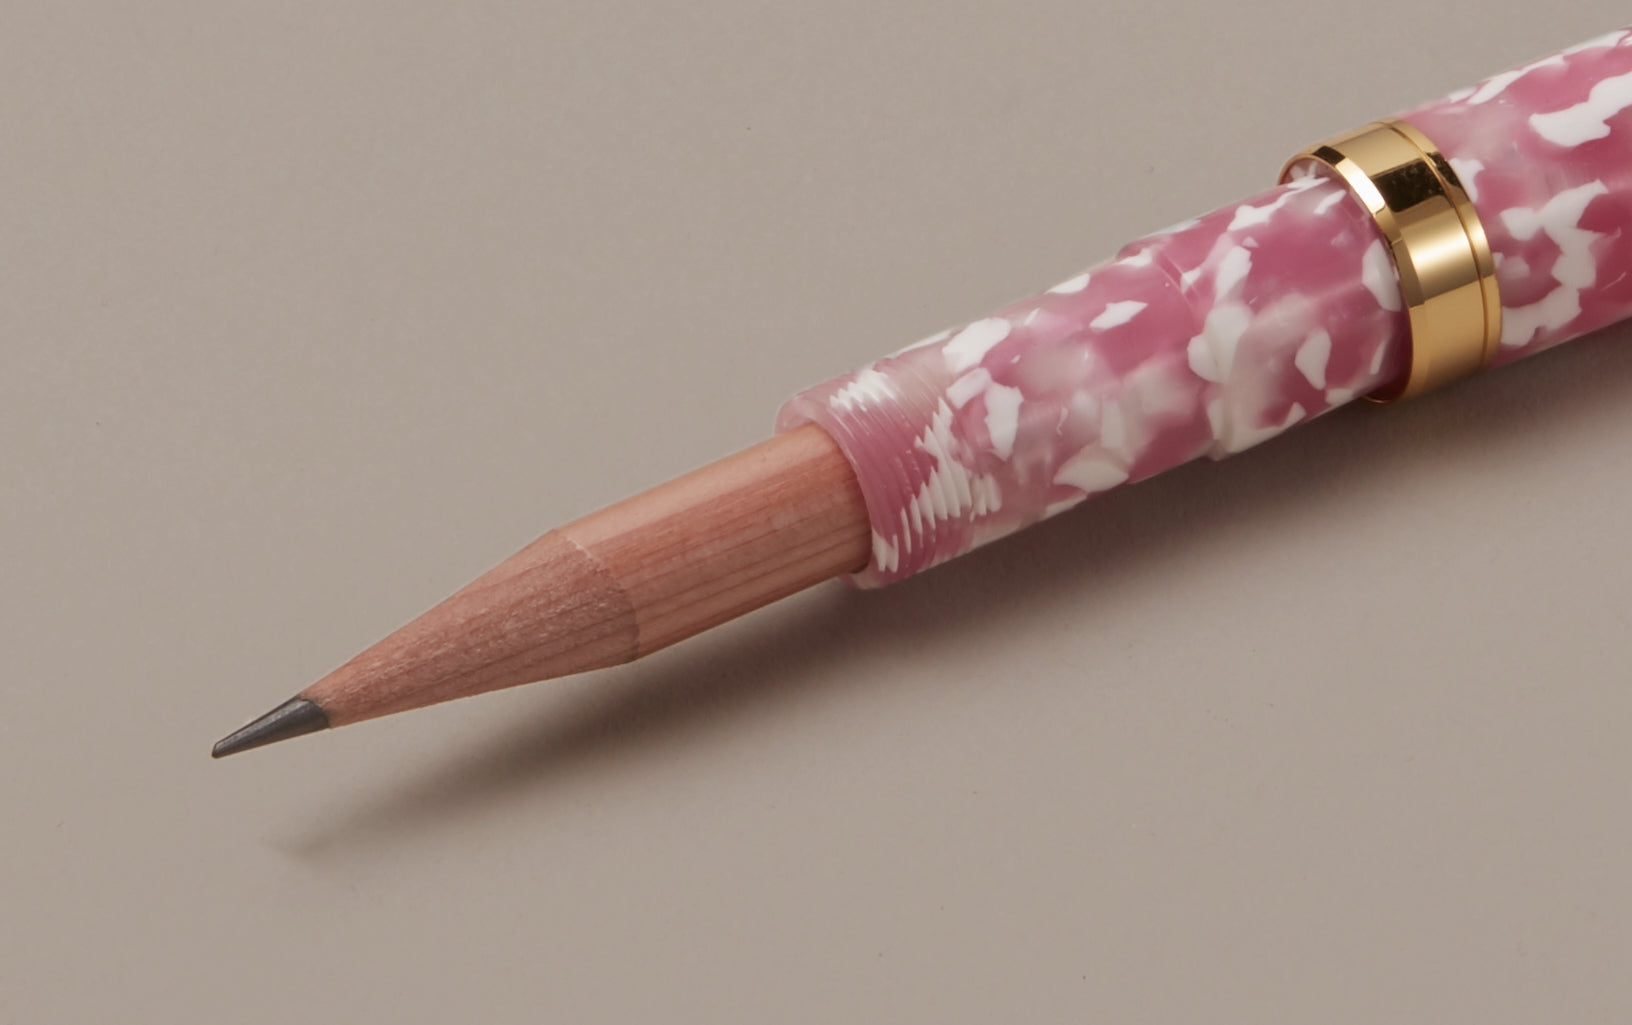 Ohnishi Seisakusho Sakura Cherry Tree Acetate Pencil Extender and Holder